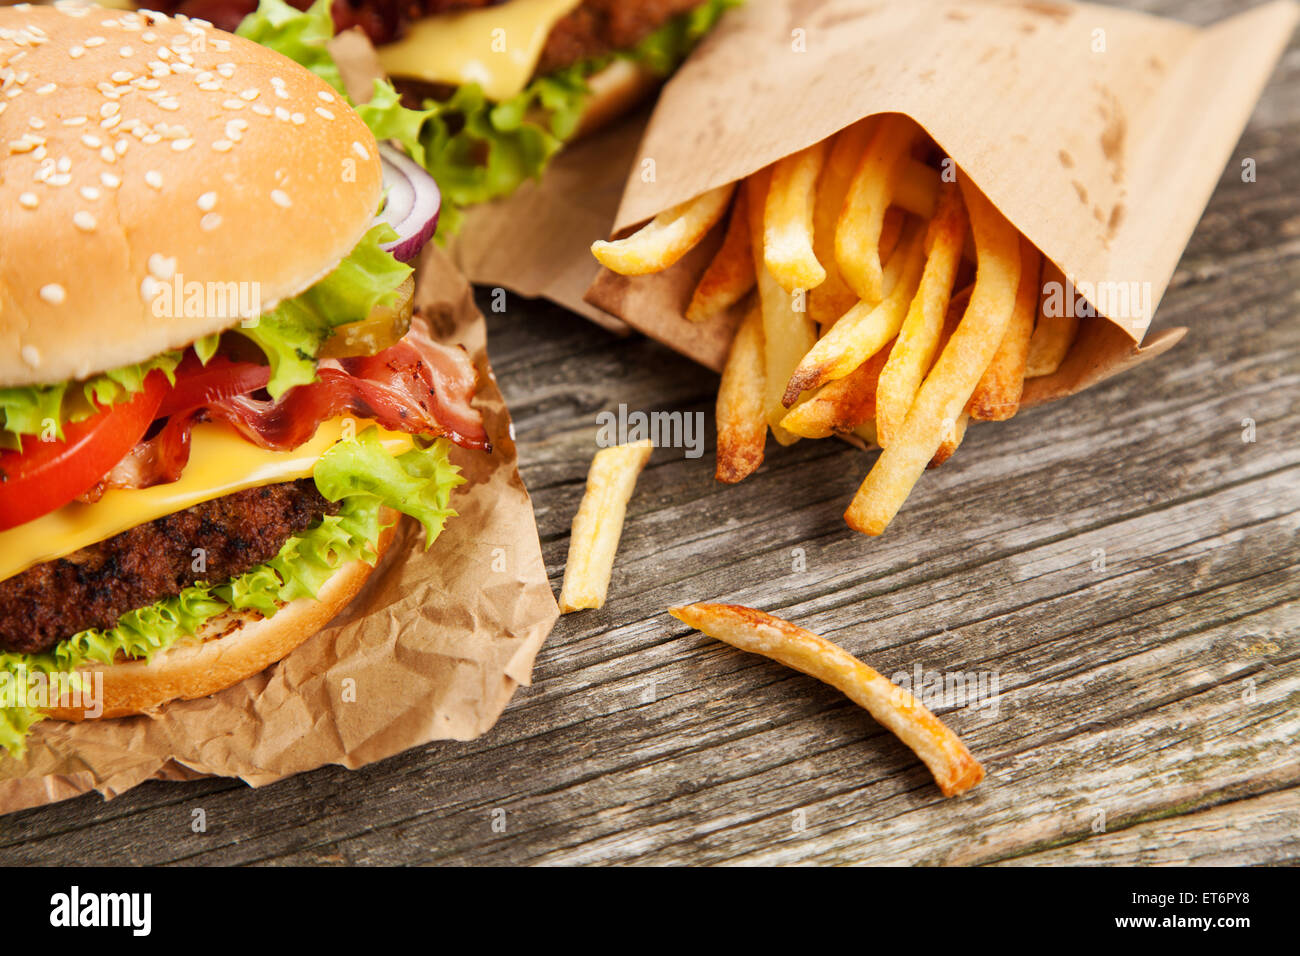 Delicious hamburger and fries Stock Photo